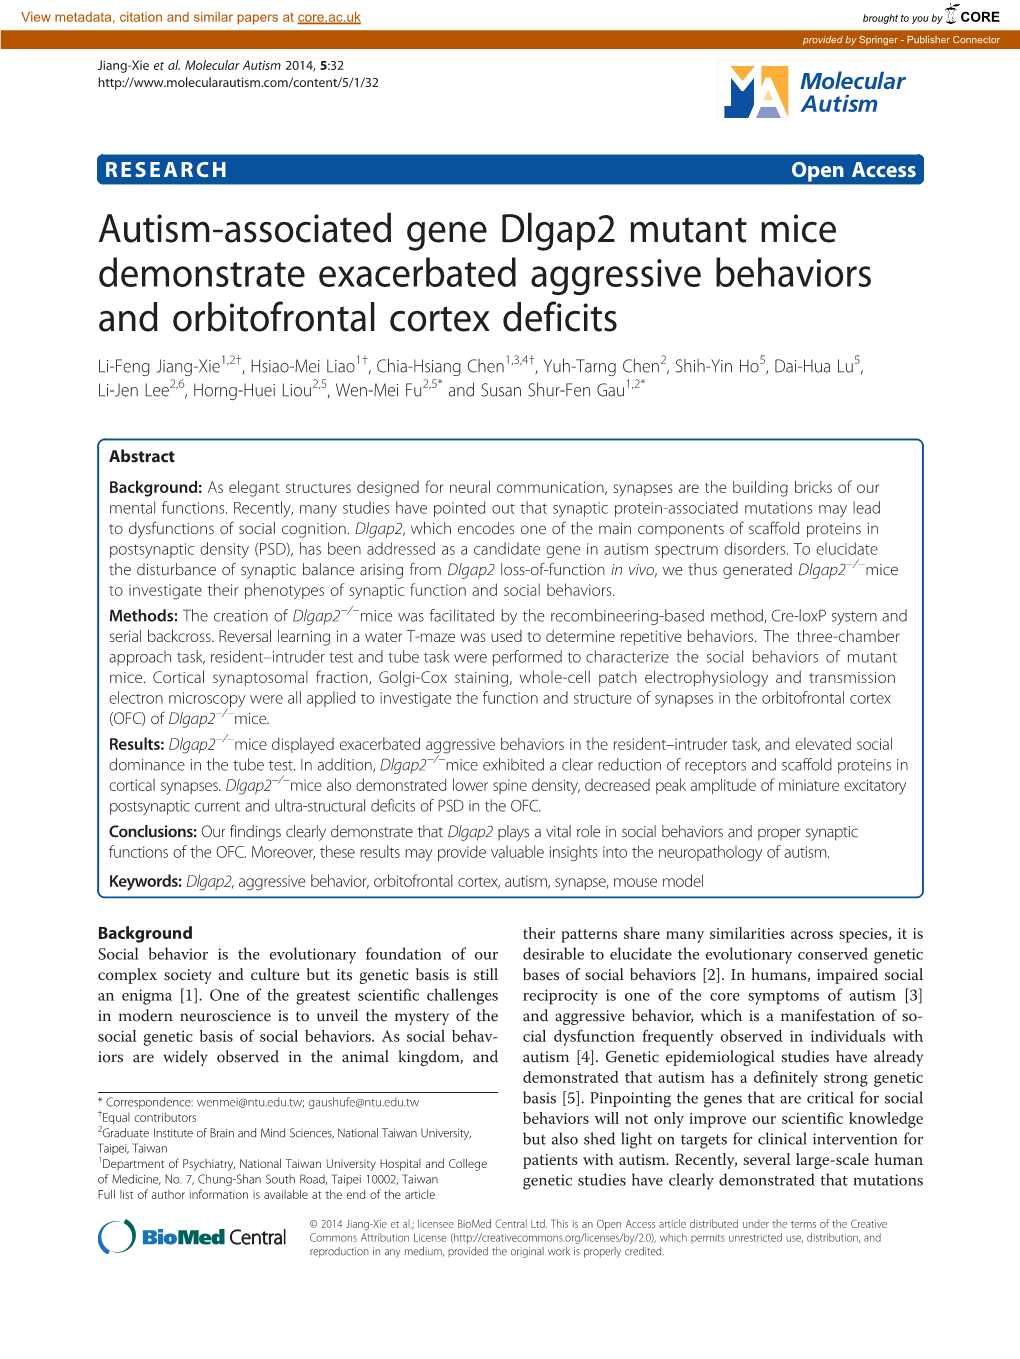 Autism-Associated Gene Dlgap2 Mutant Mice Demonstrate